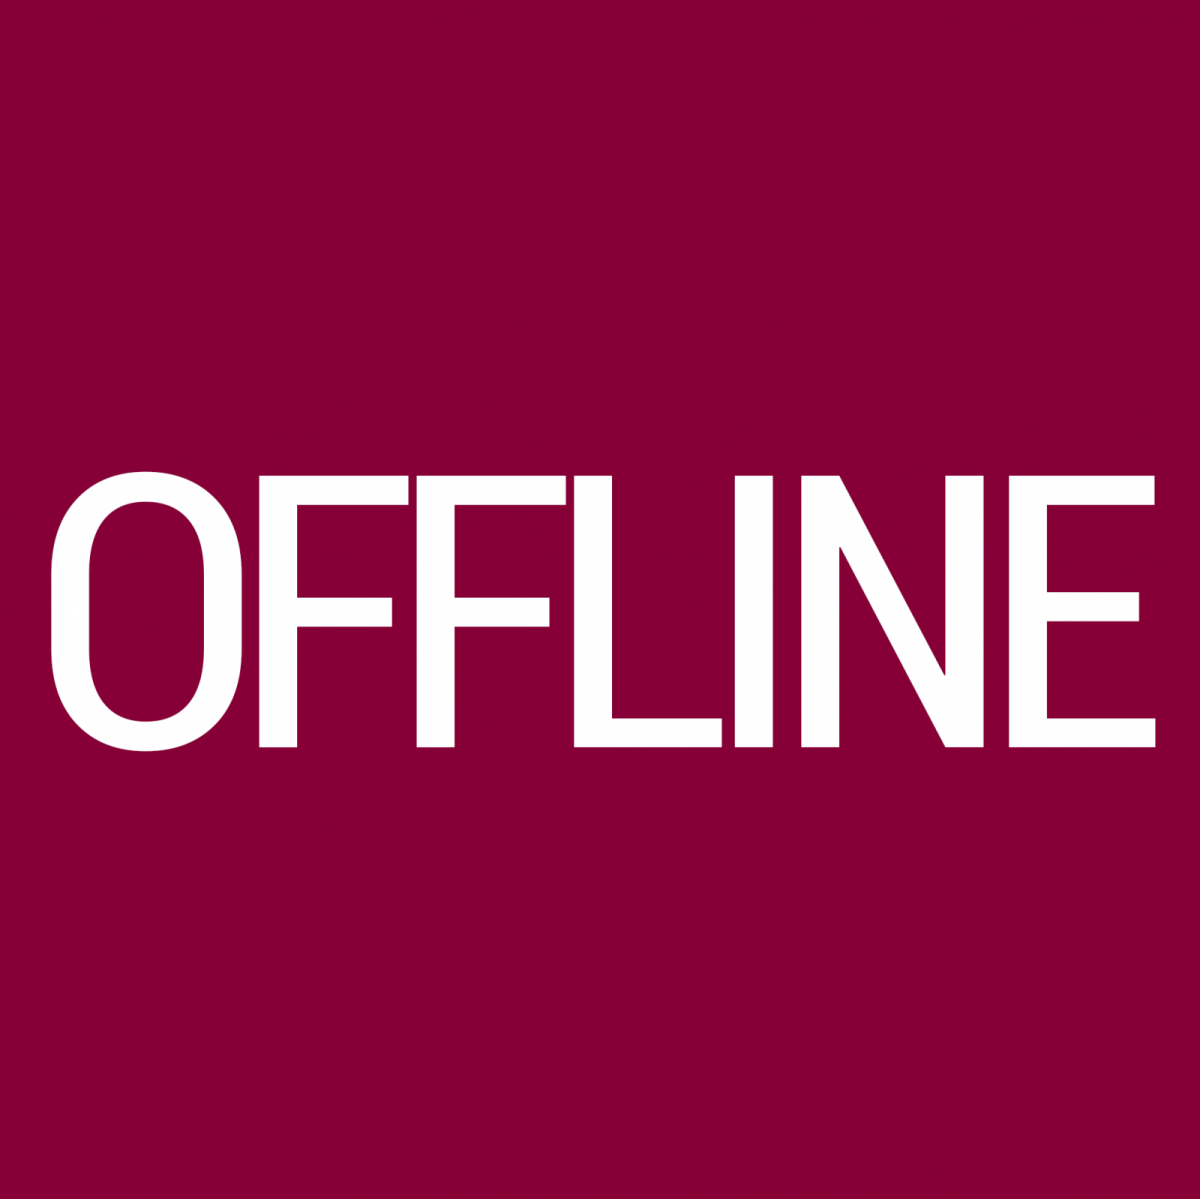 Www offline. Офлайн. Логотип offline. Надпись оффлайн. Offline логотип офлайн.